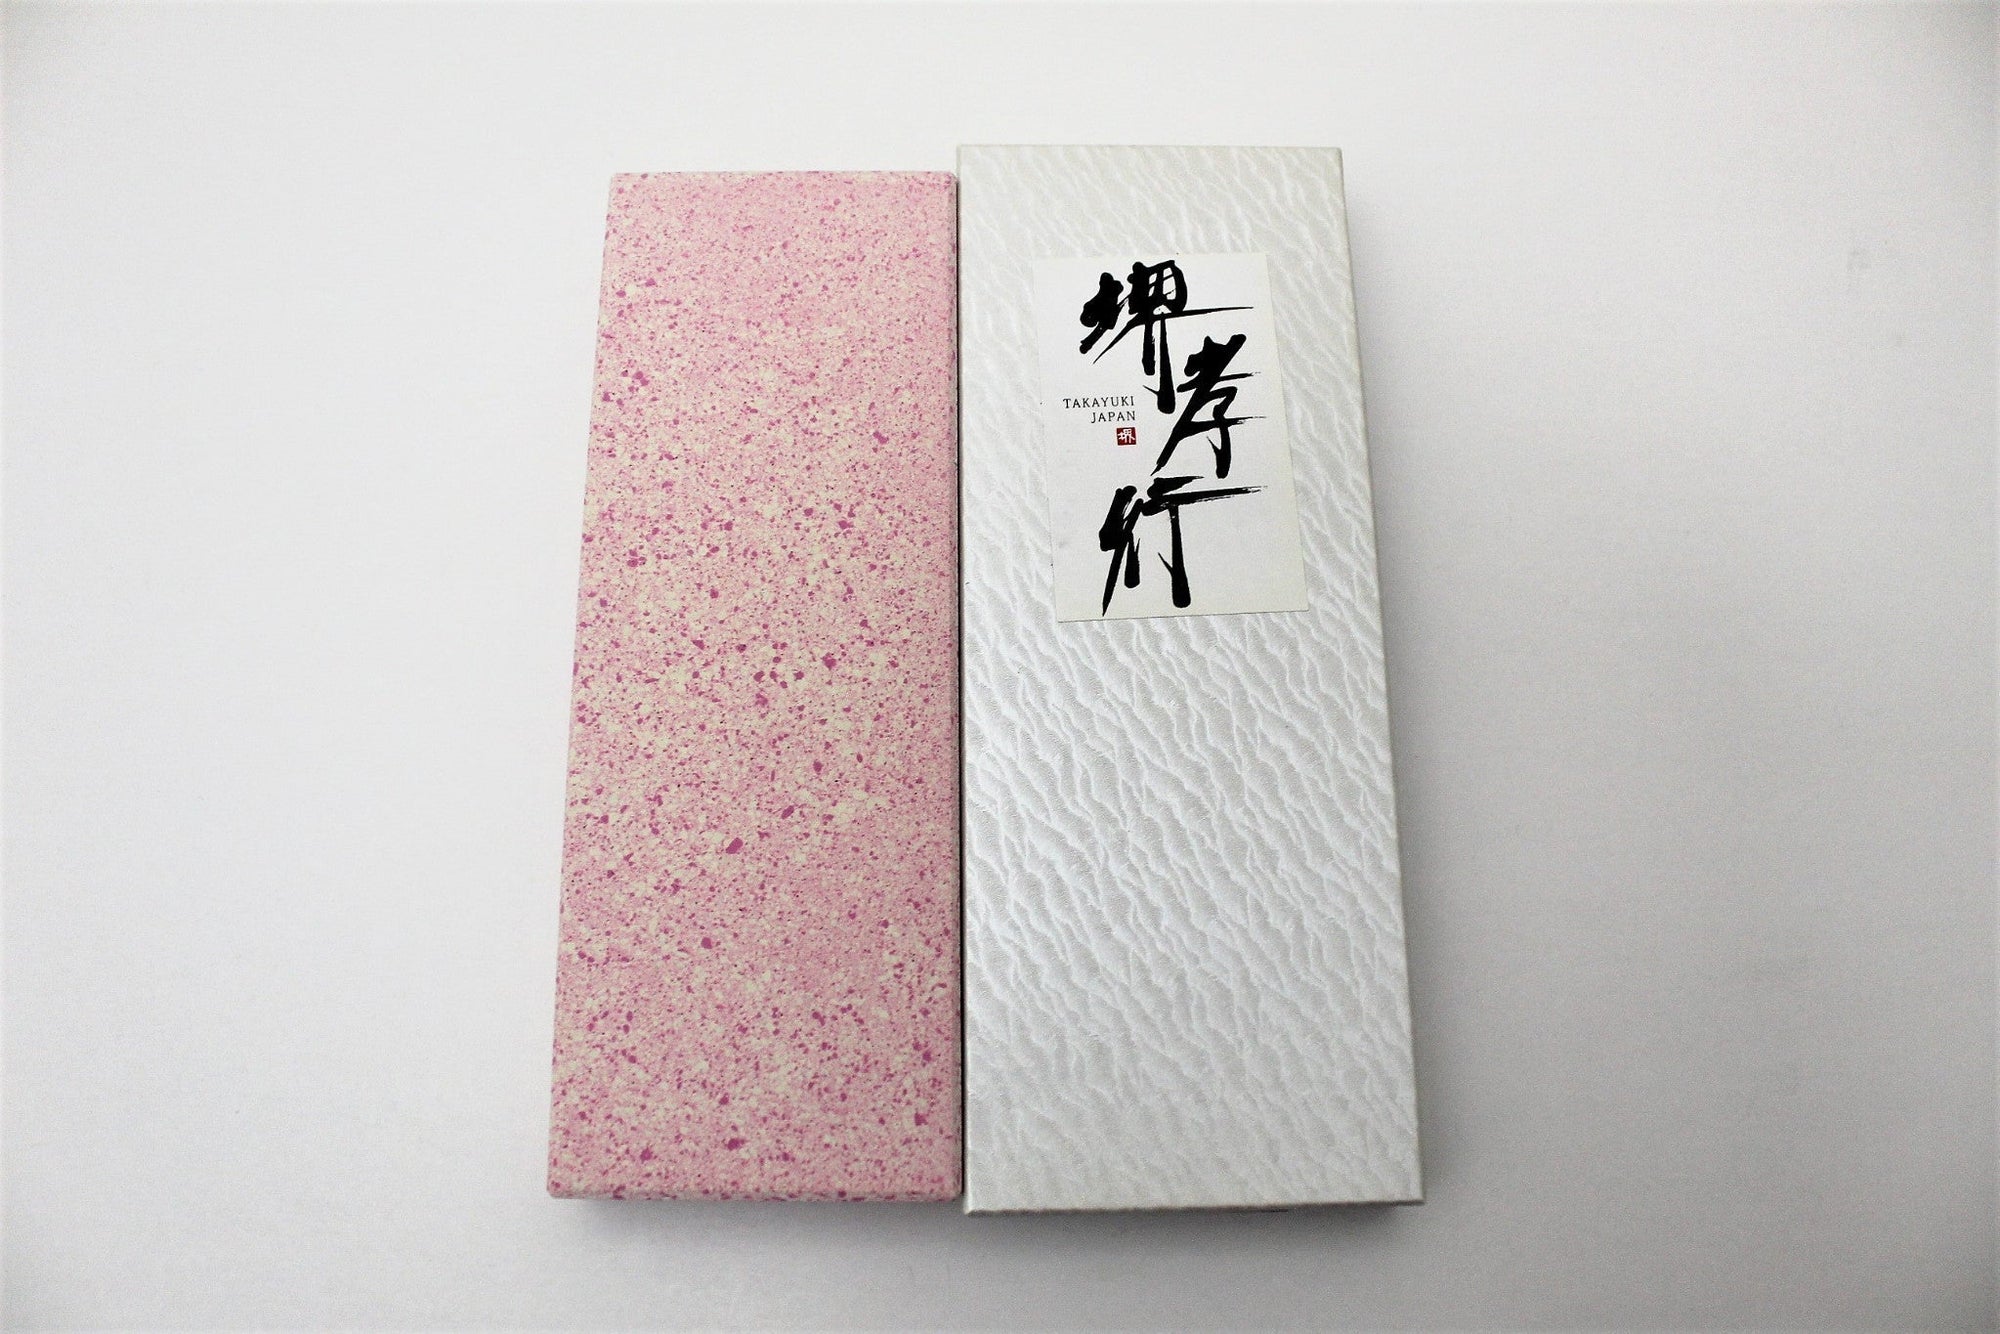 Accessories - Sakai Takayuki Japanese Sharpening Stone - Grit #4000